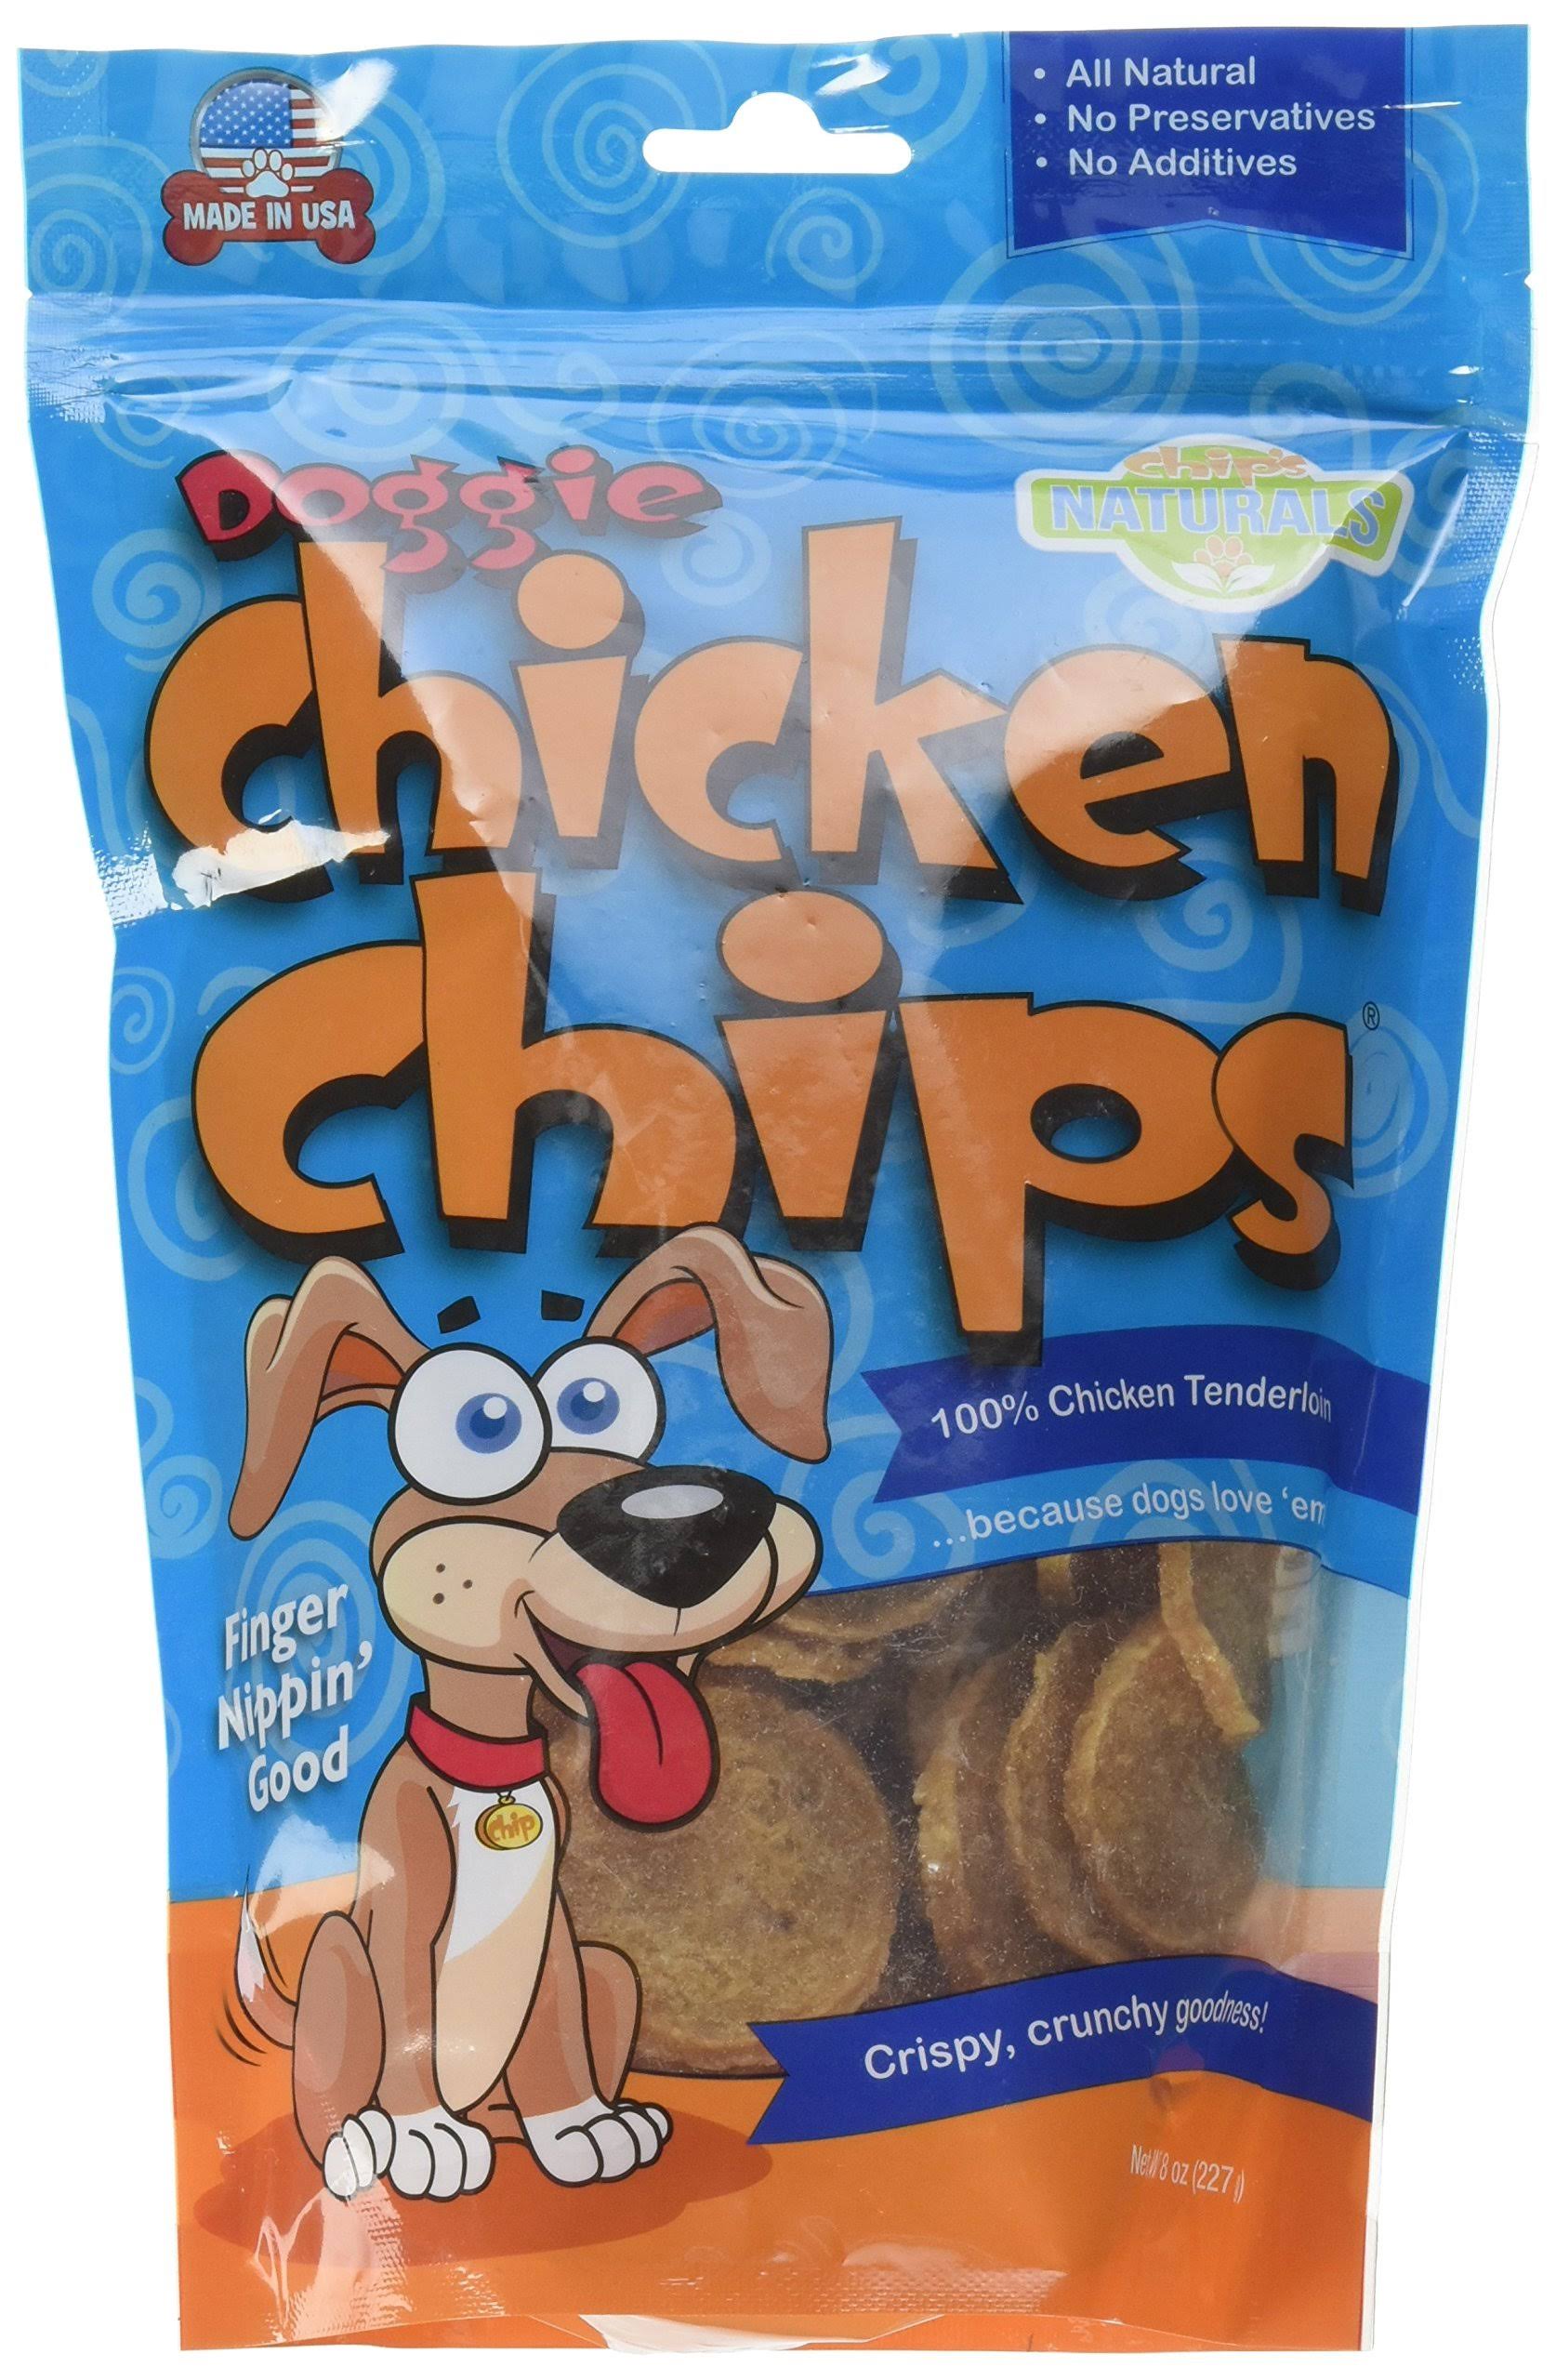 Chicken Doggie Chips All Natural Chicken Chips- Dog Treats